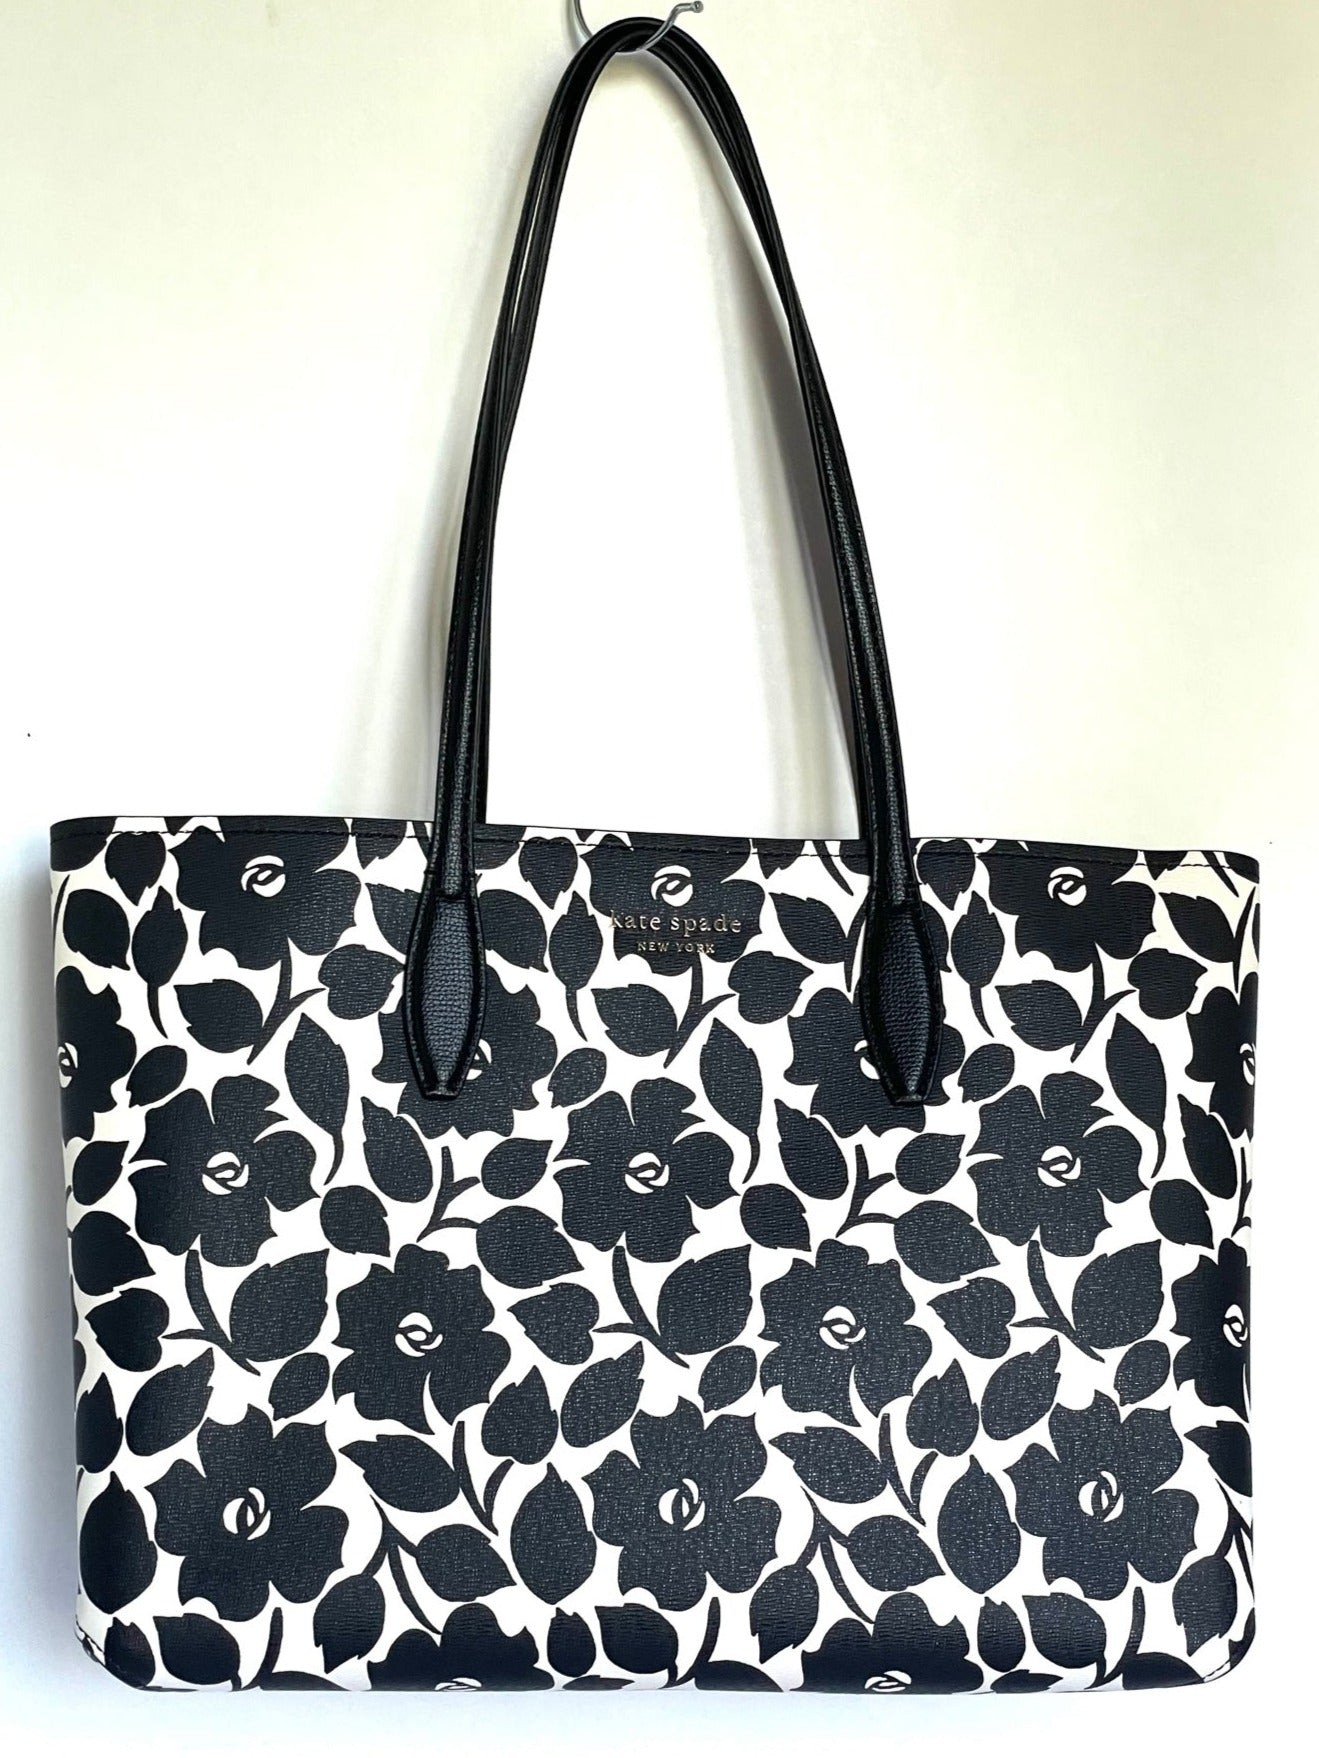 Kate Spade Black Leather Large Tote Bag/purse